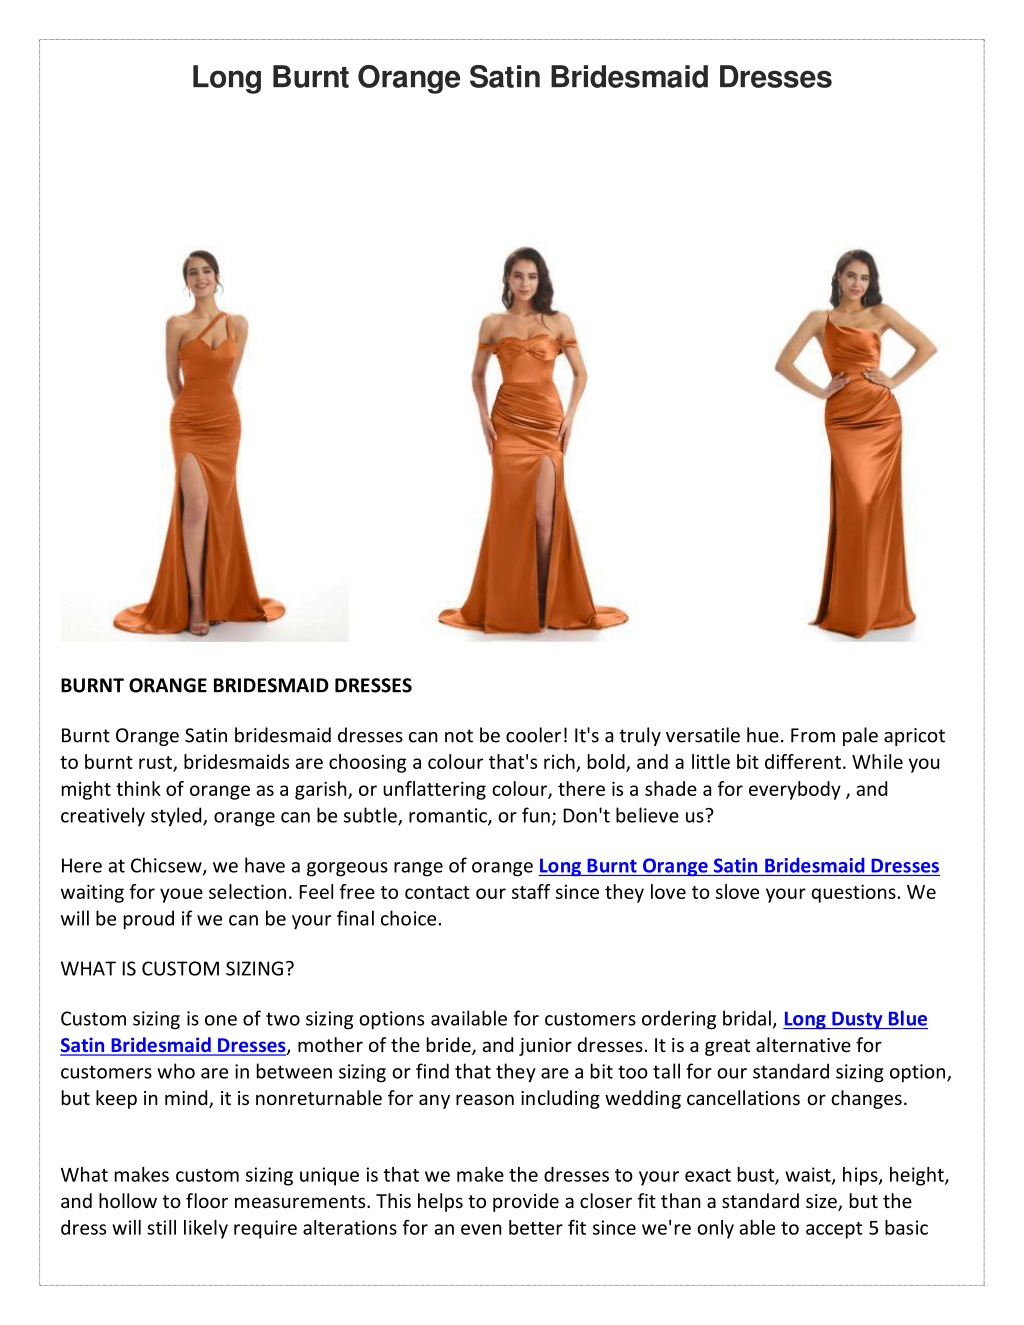 PPT - Long Burnt Orange Satin Bridesmaid Dresses PowerPoint ...